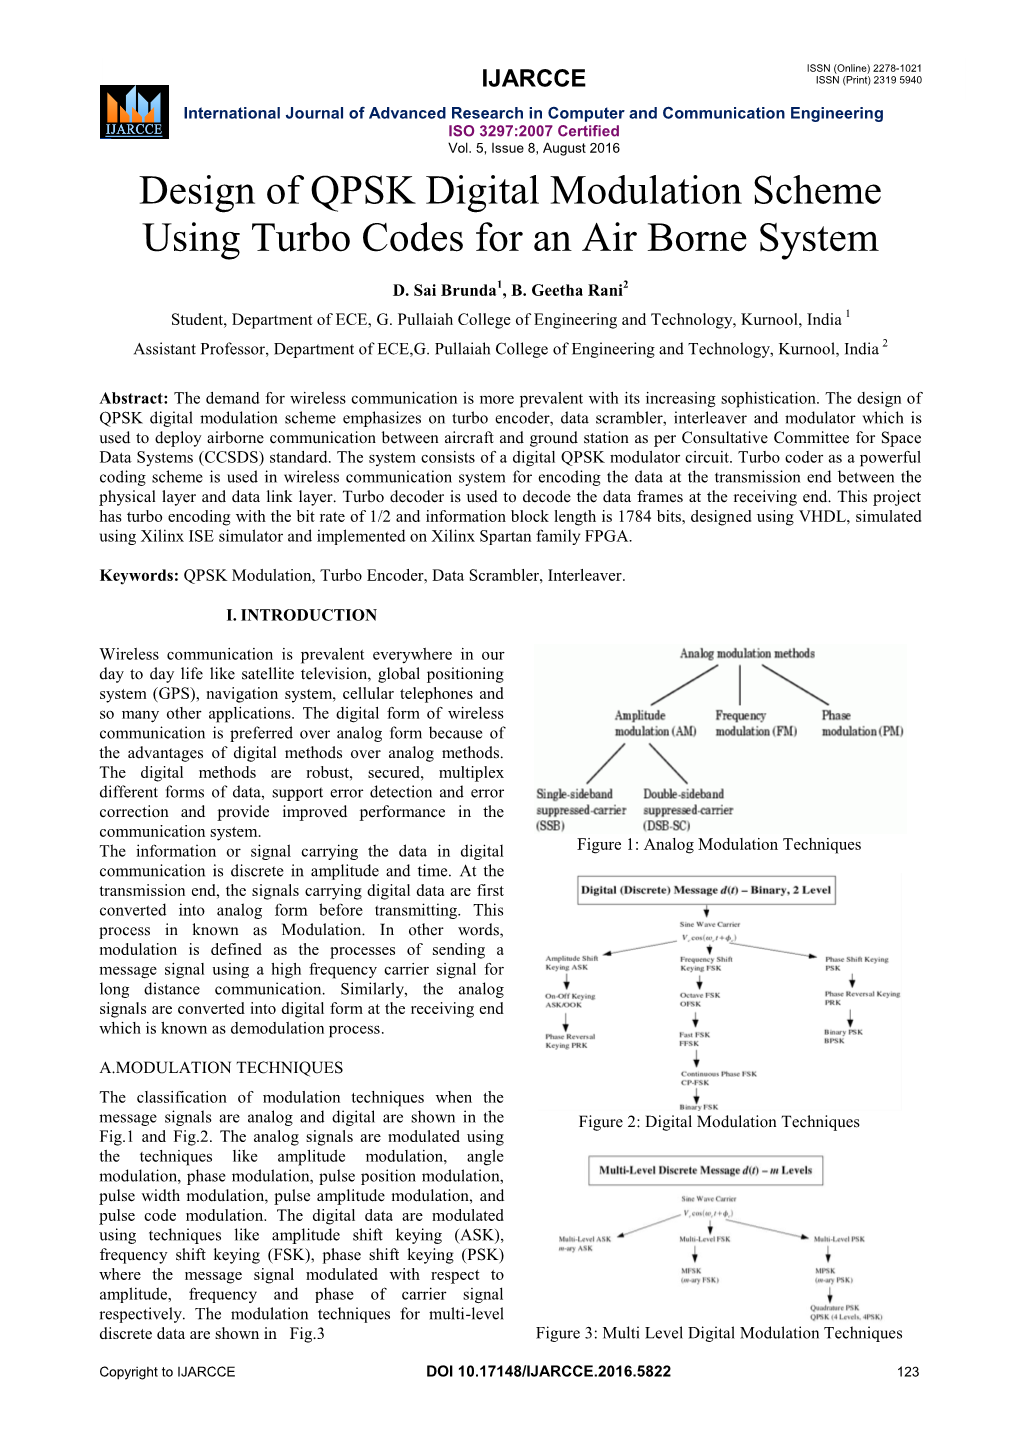 Design of QPSK Digital Modulation Scheme Using Turbo Codes for an Air Borne System